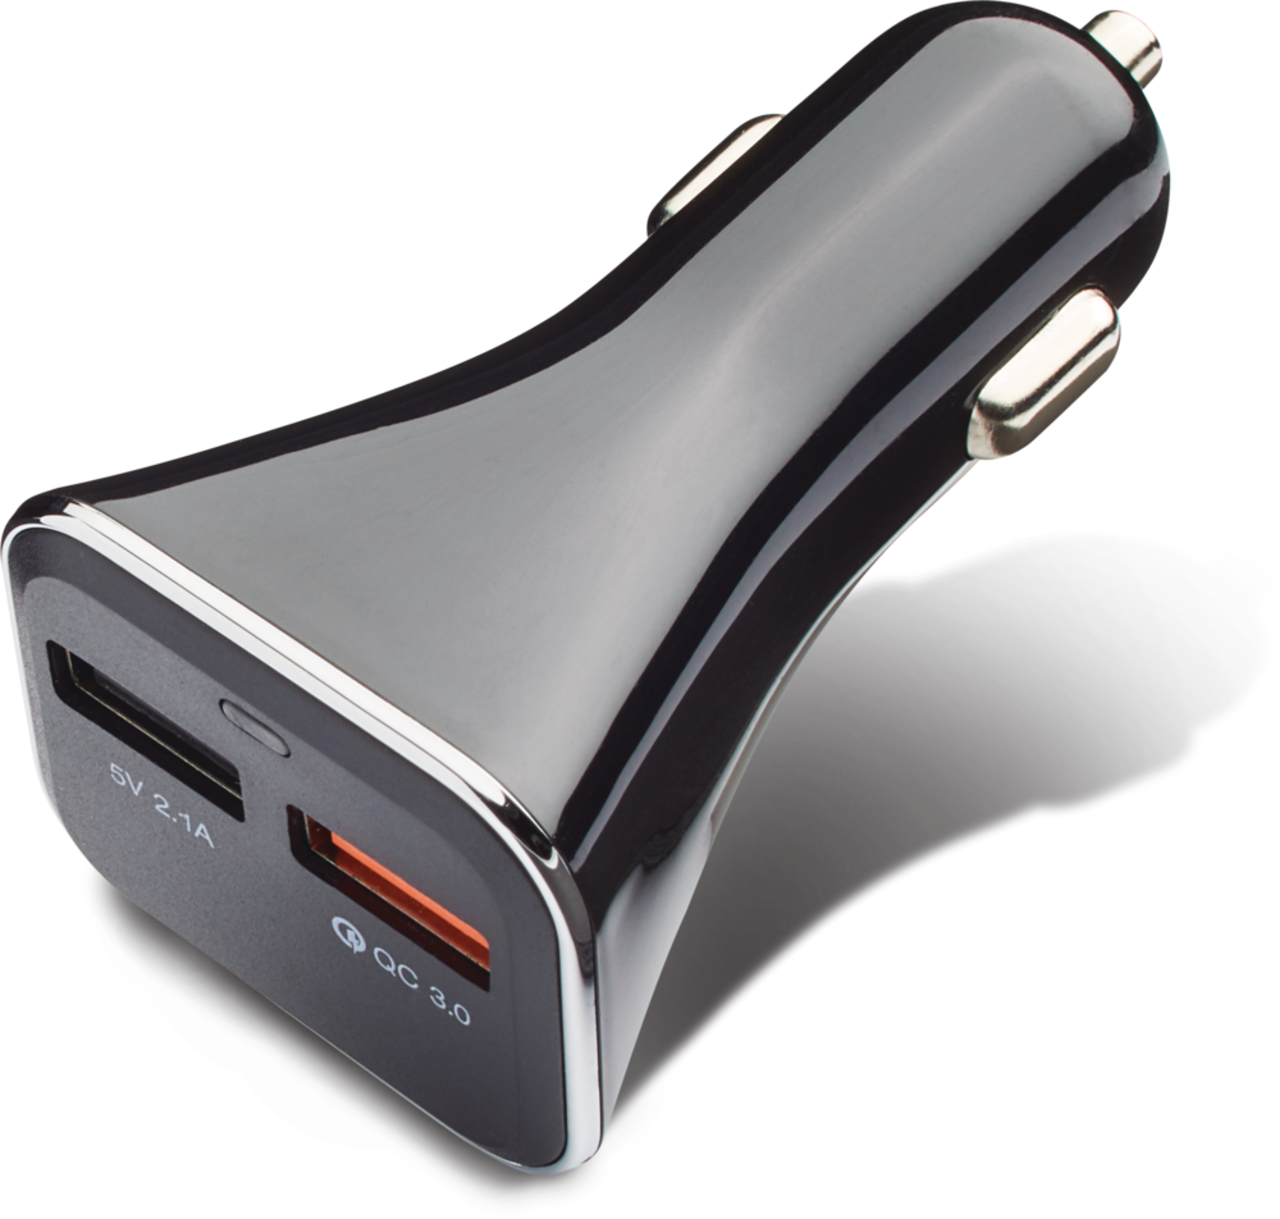 Chargeur voiture ultra rapide Qualcomm 3.0 2 ports USB 3A - prix